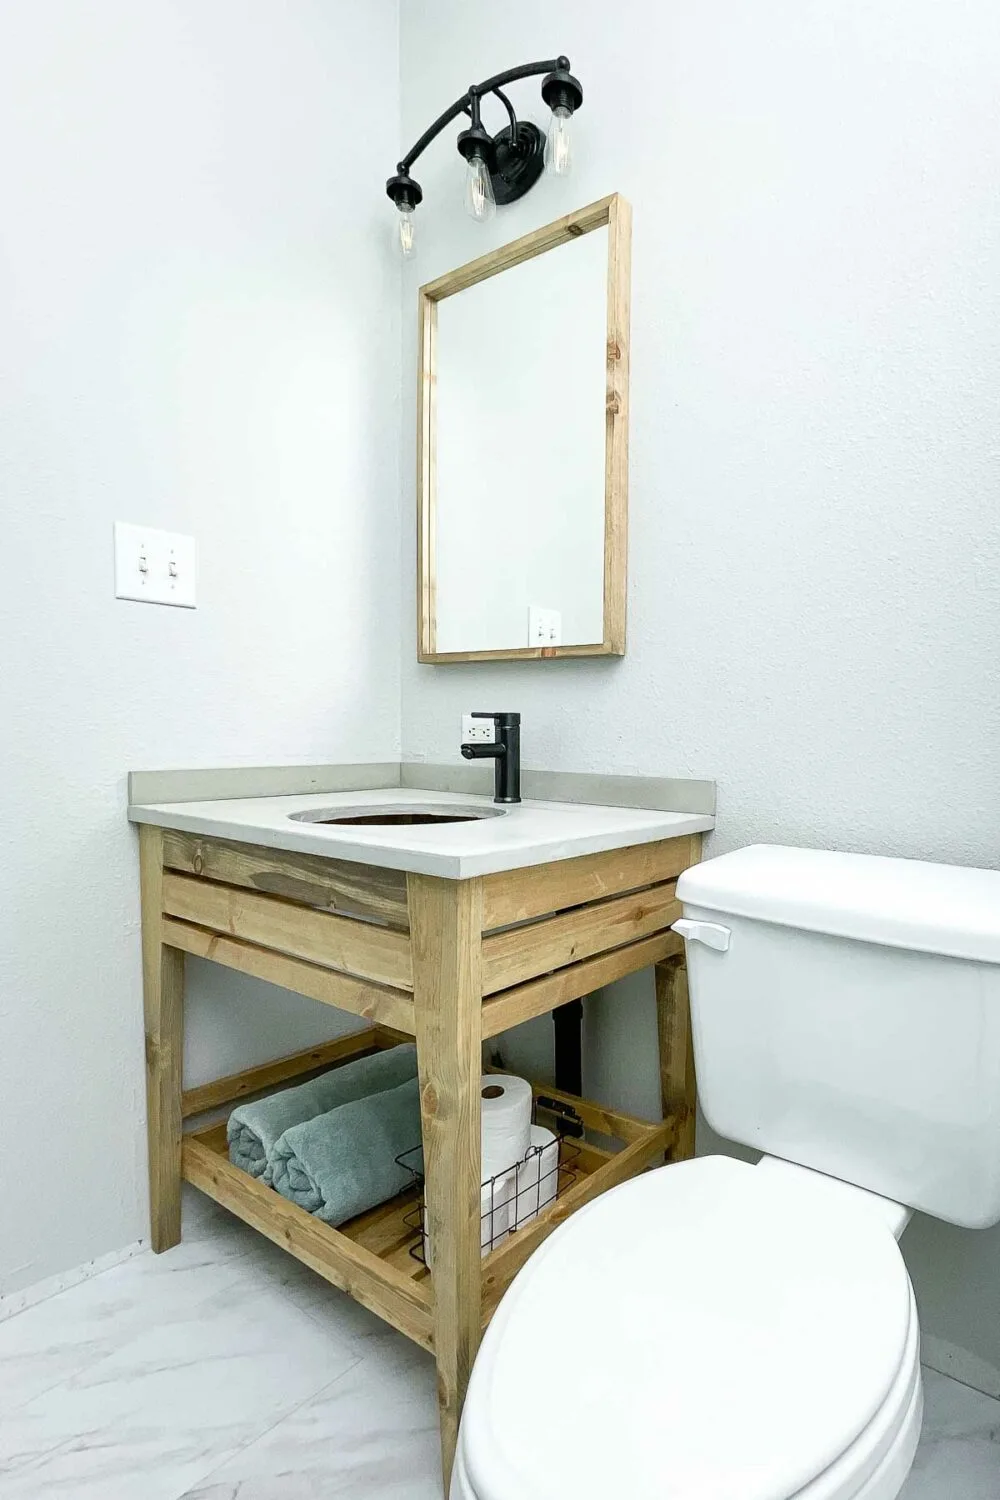 DIY open bathroom vanity in the budget bathroom remodel with a concrete countertop.